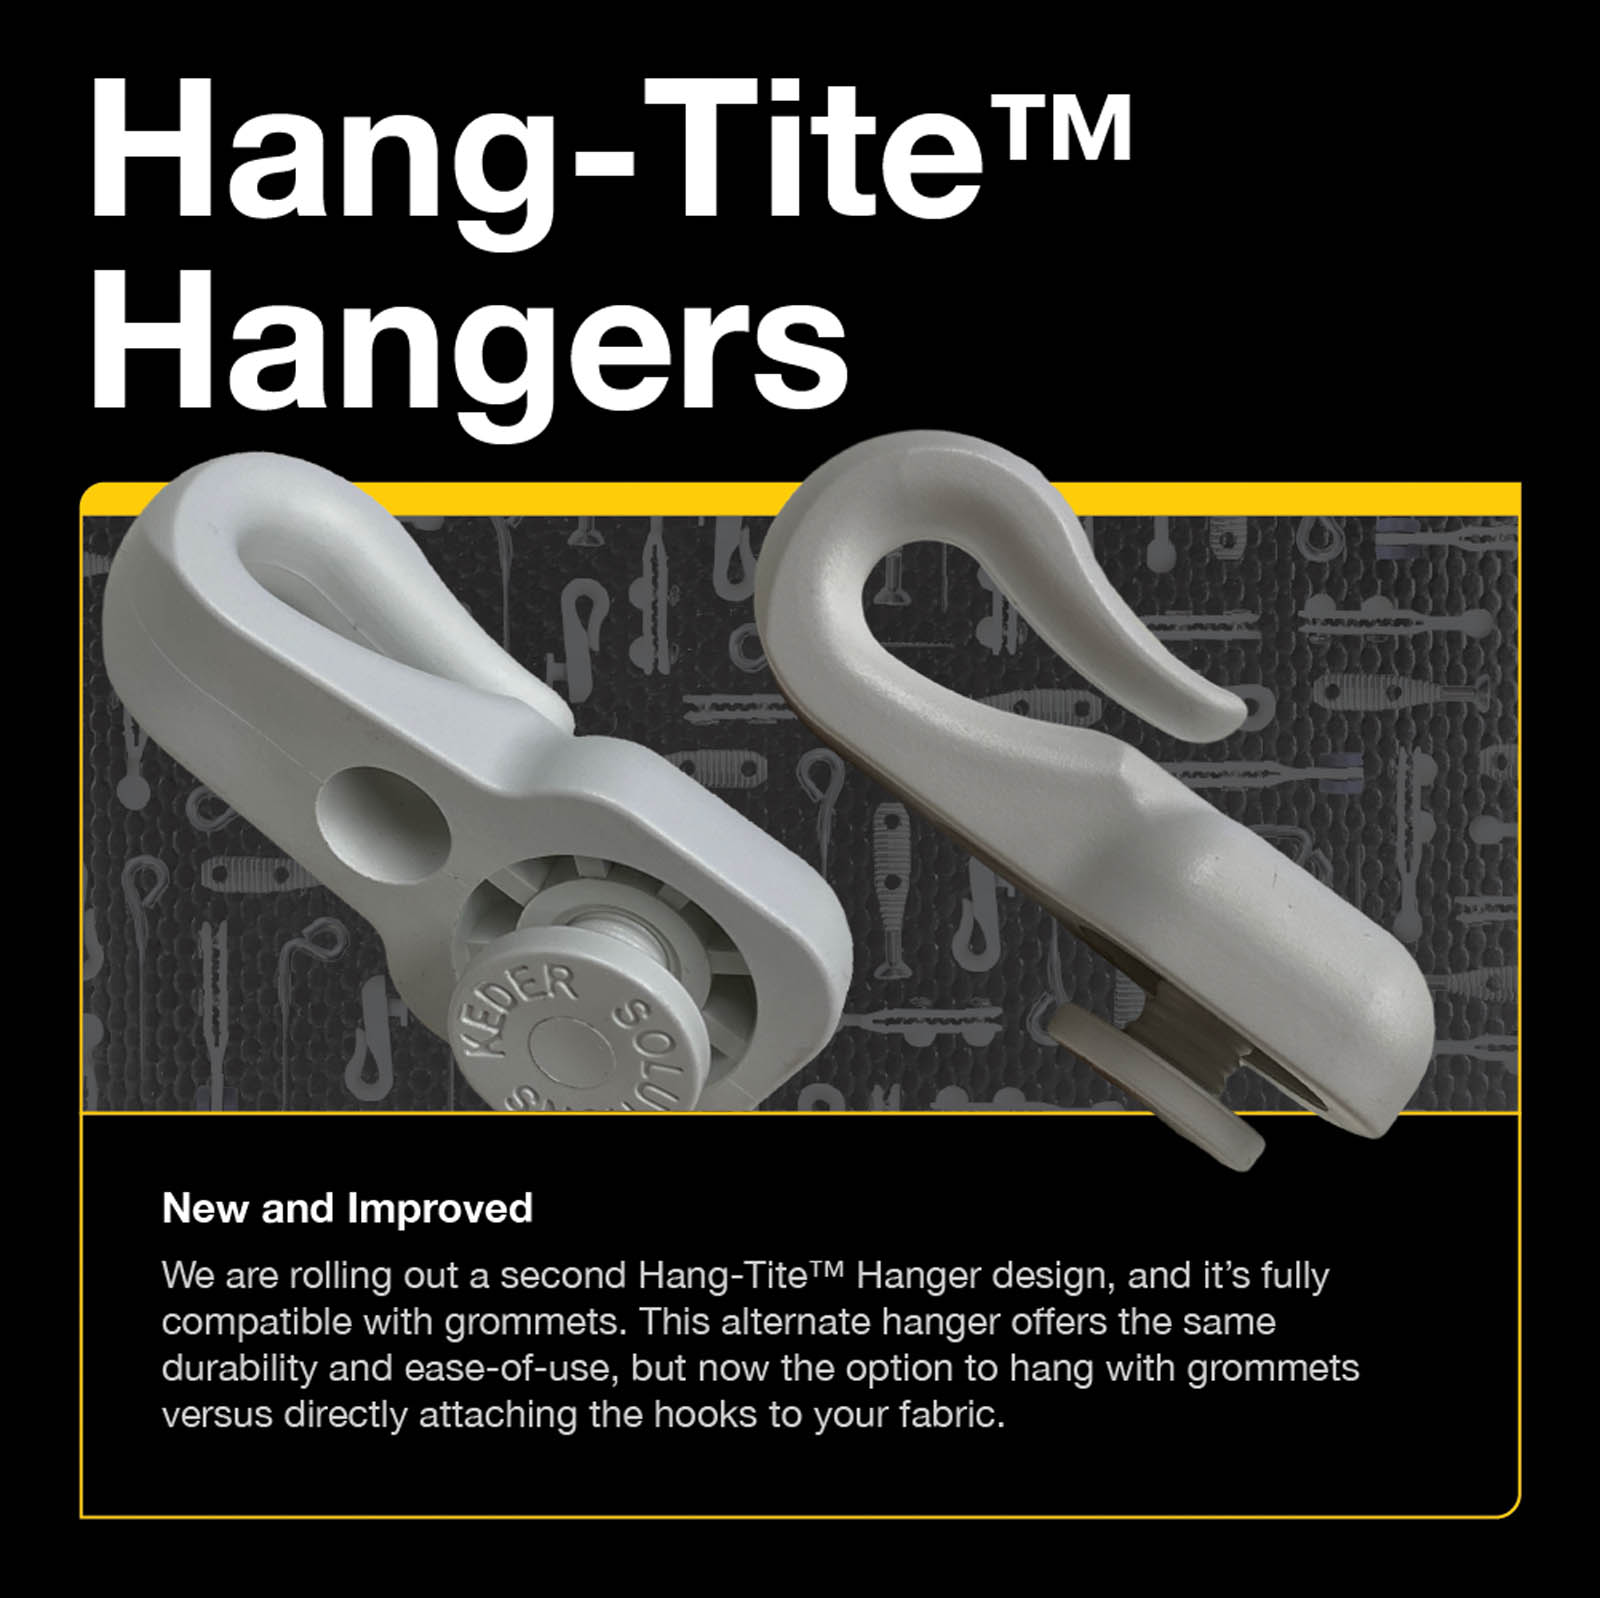 Hang-tite Hangers Image